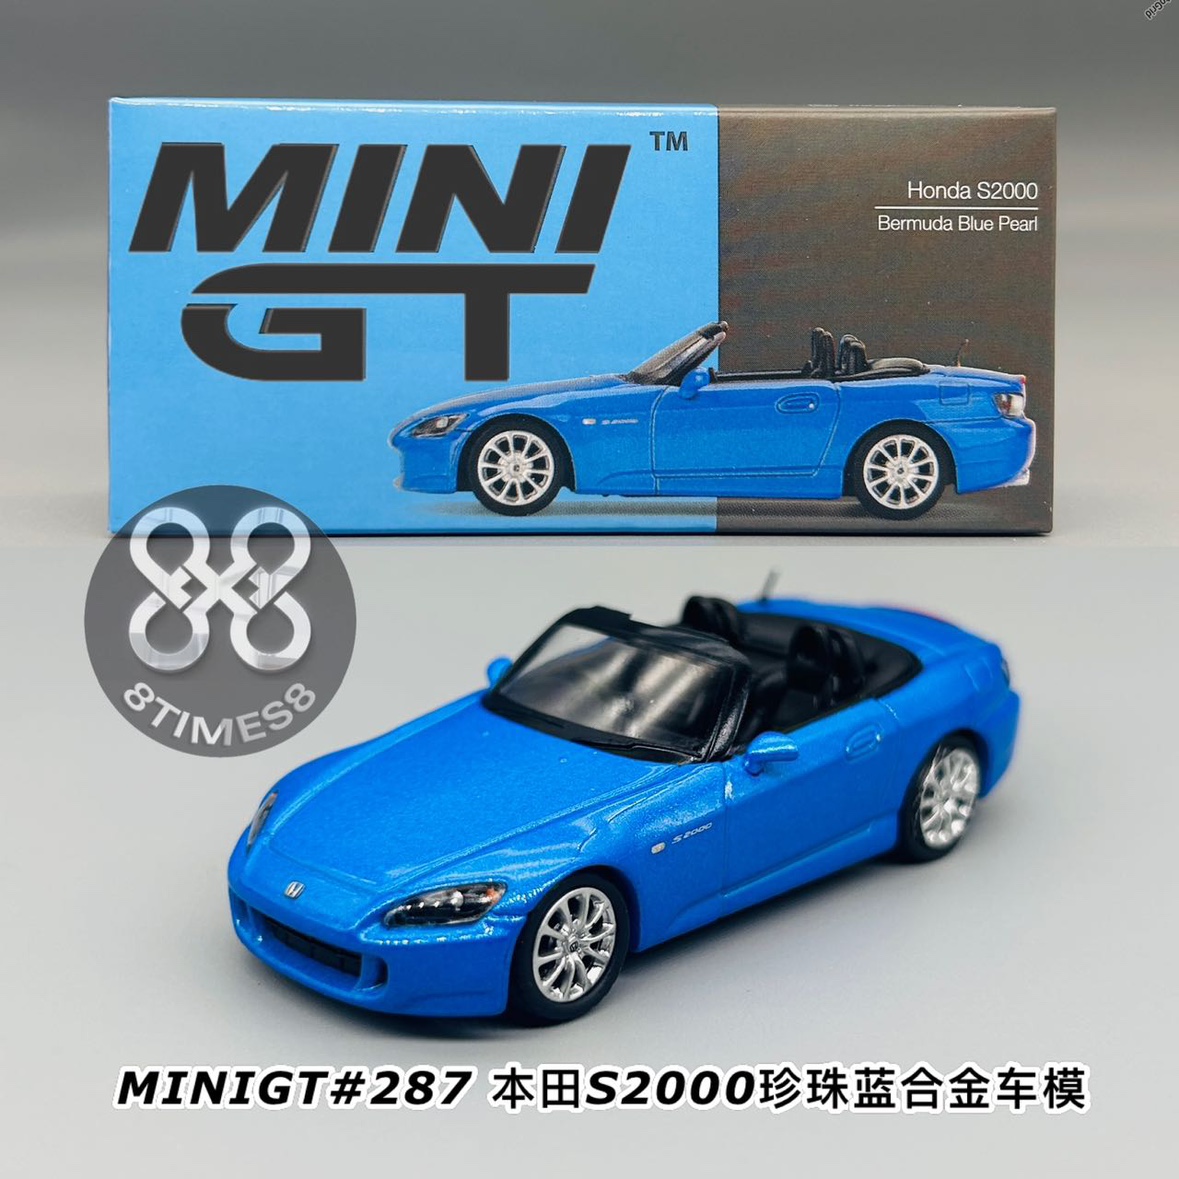 MINIGT 1:64 #287 本田S2000 TypeS Bermuda金属蓝 合金汽车模型